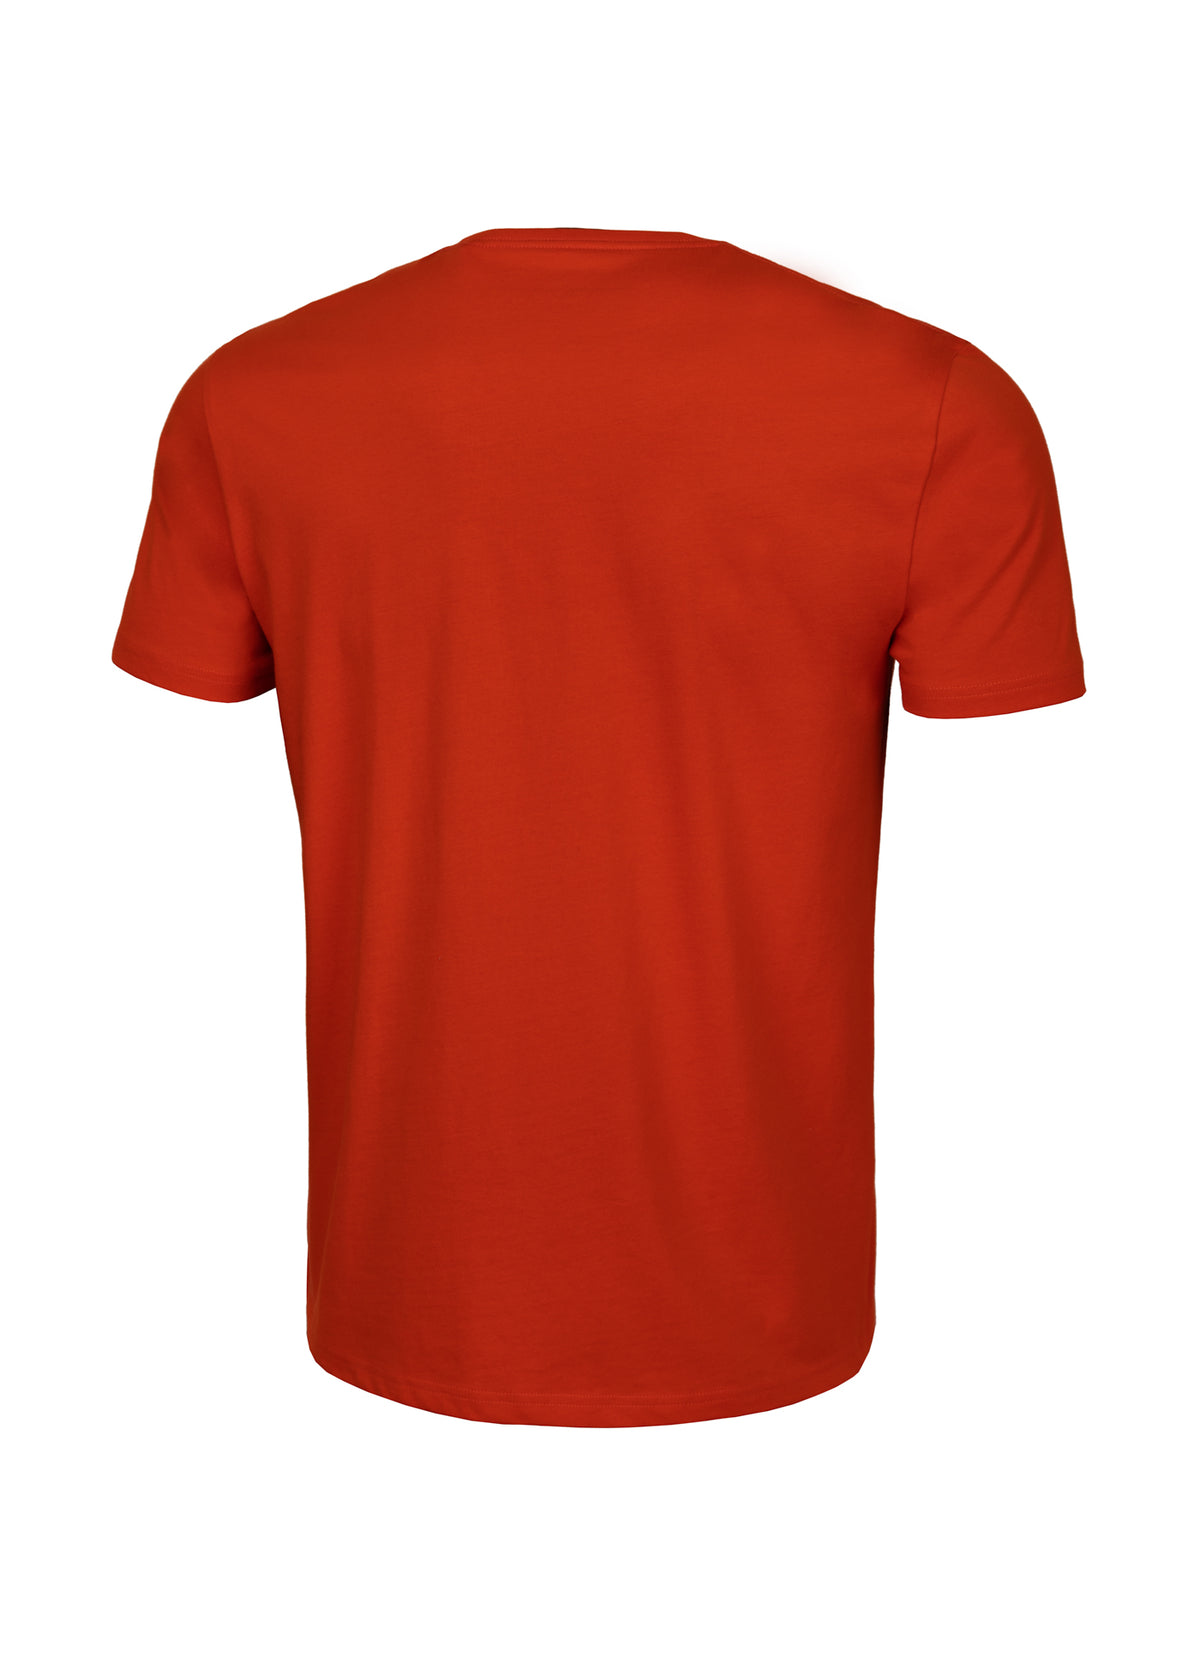 T-shirt CALIFORNIA Orange Red.